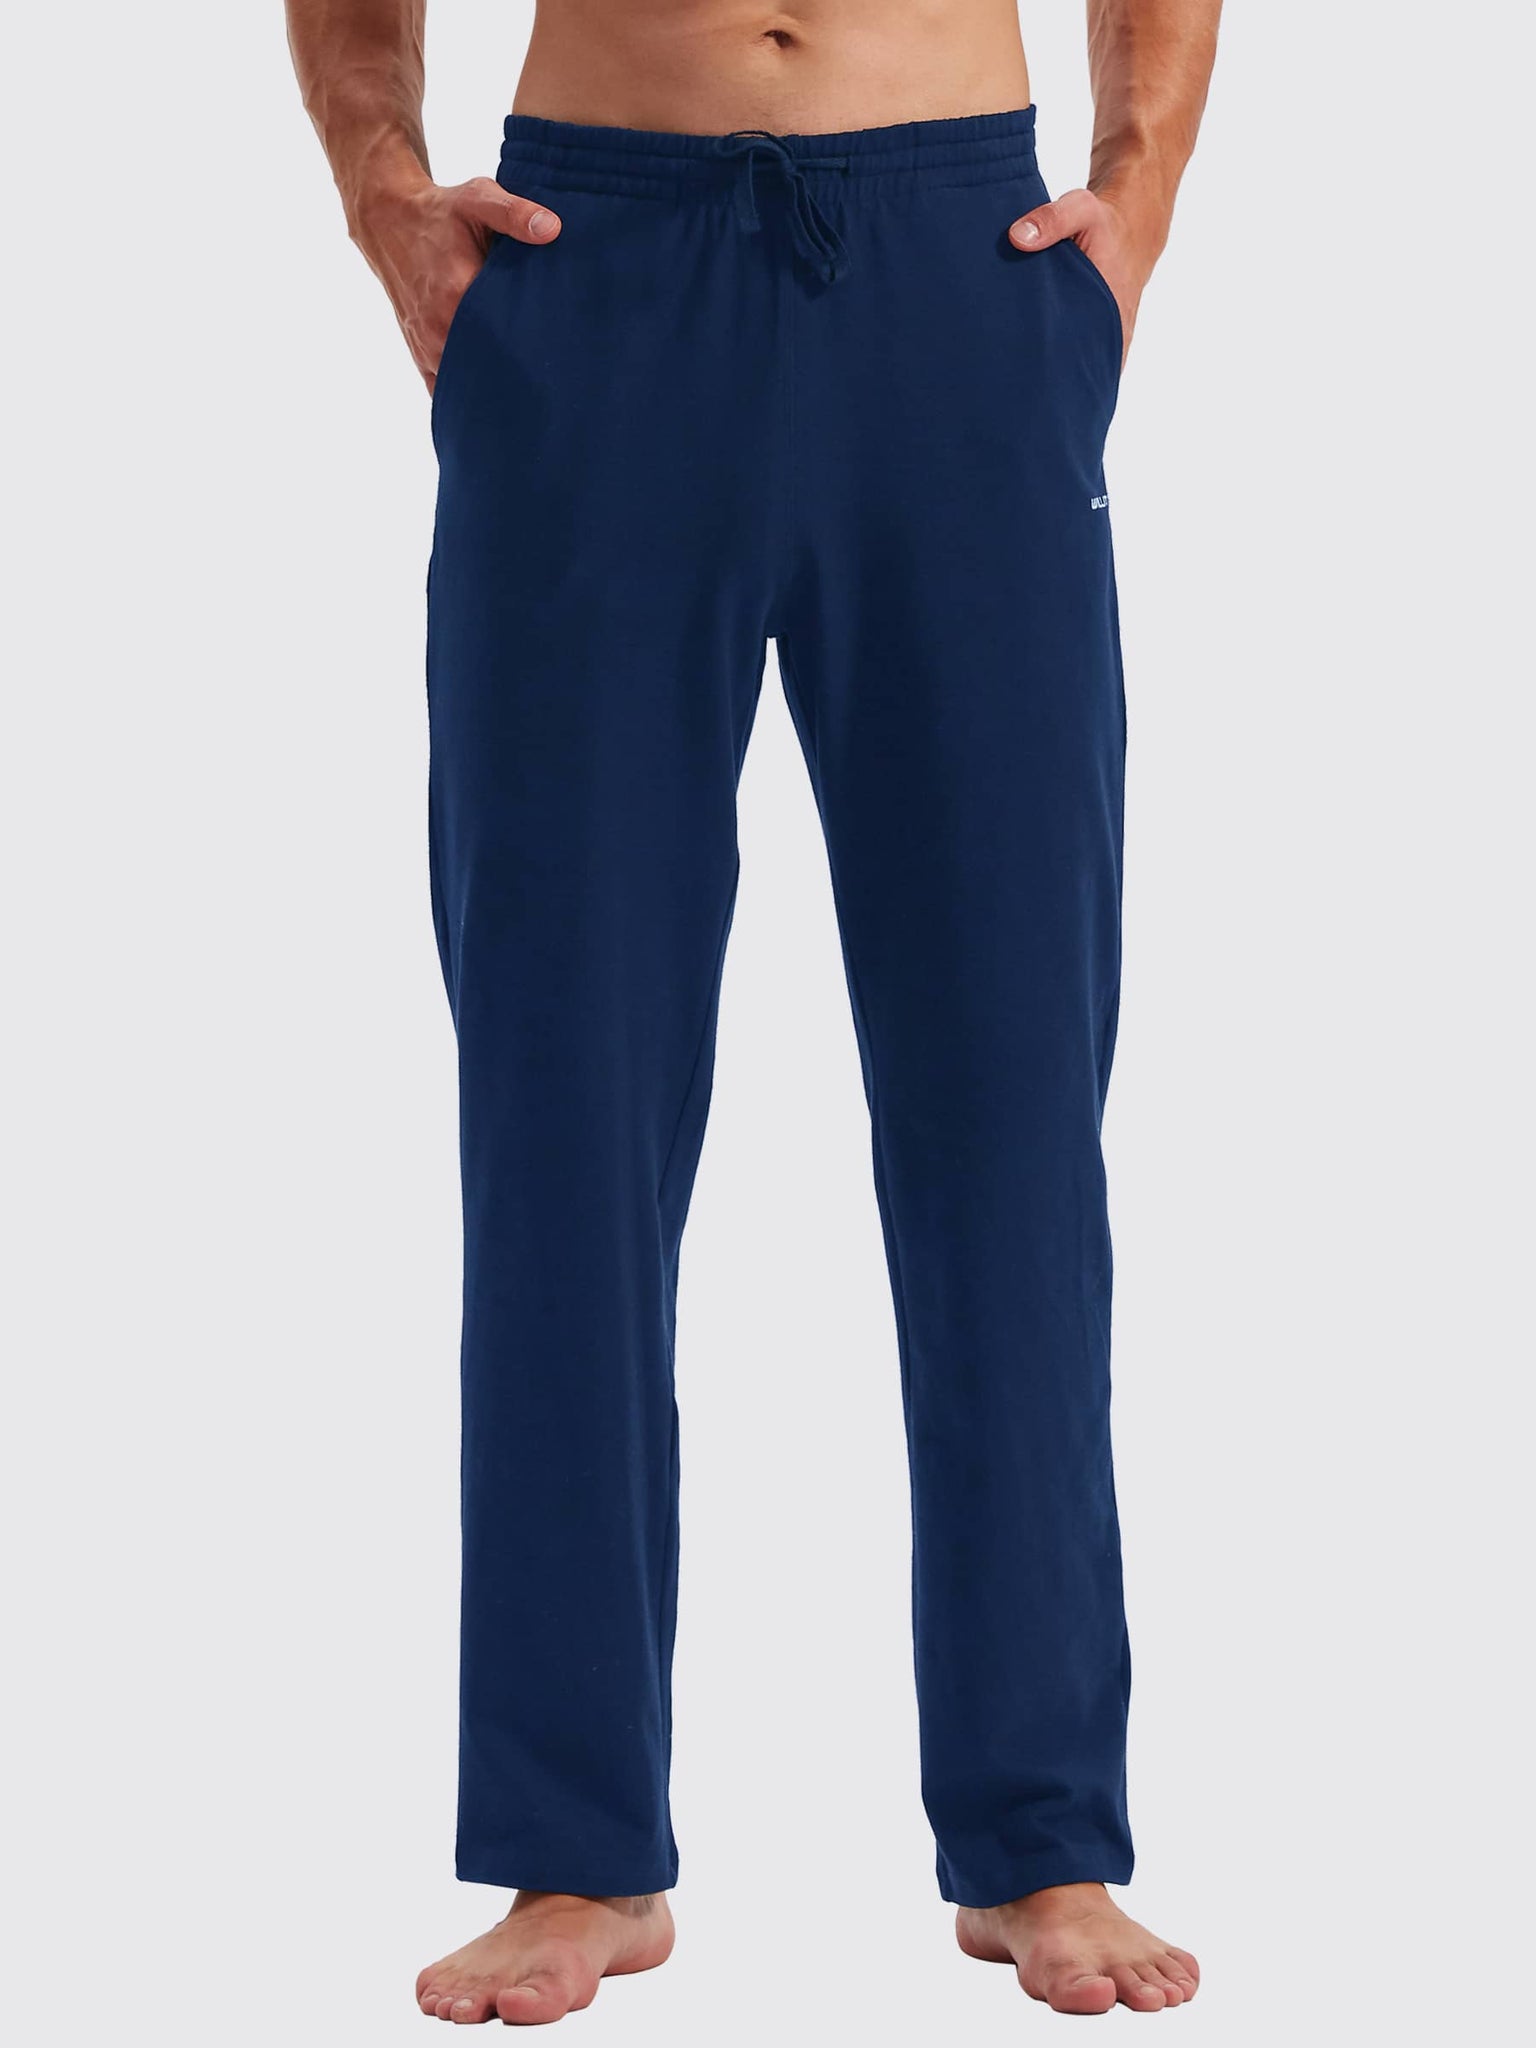 Men's Cotton Yoga Balance Sweatpants_Navy_model1